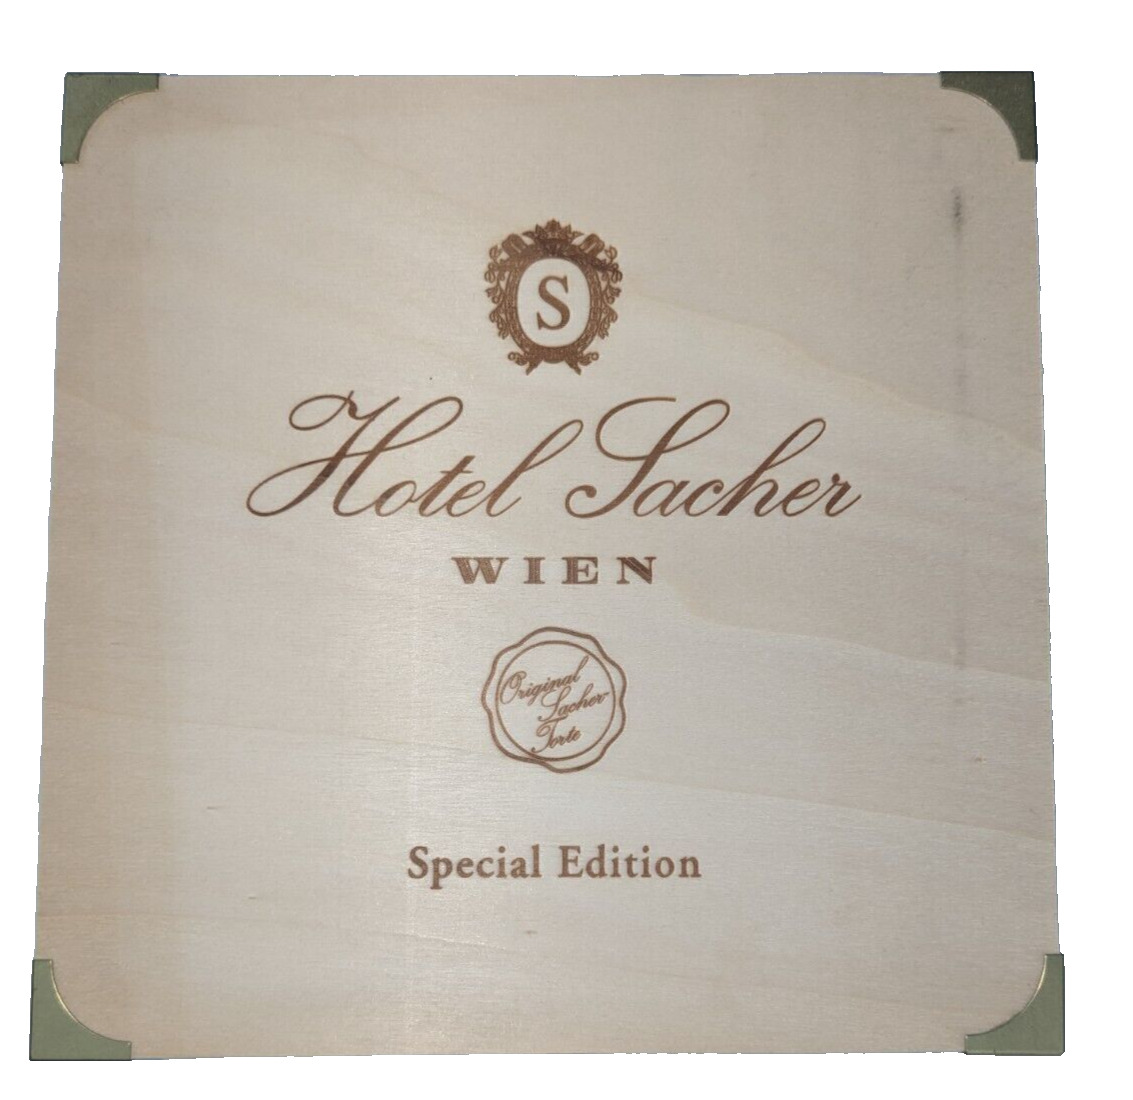 Wooden Hinged Box, Hotel Sacher Wien Original Torte Special Edition, Advertising